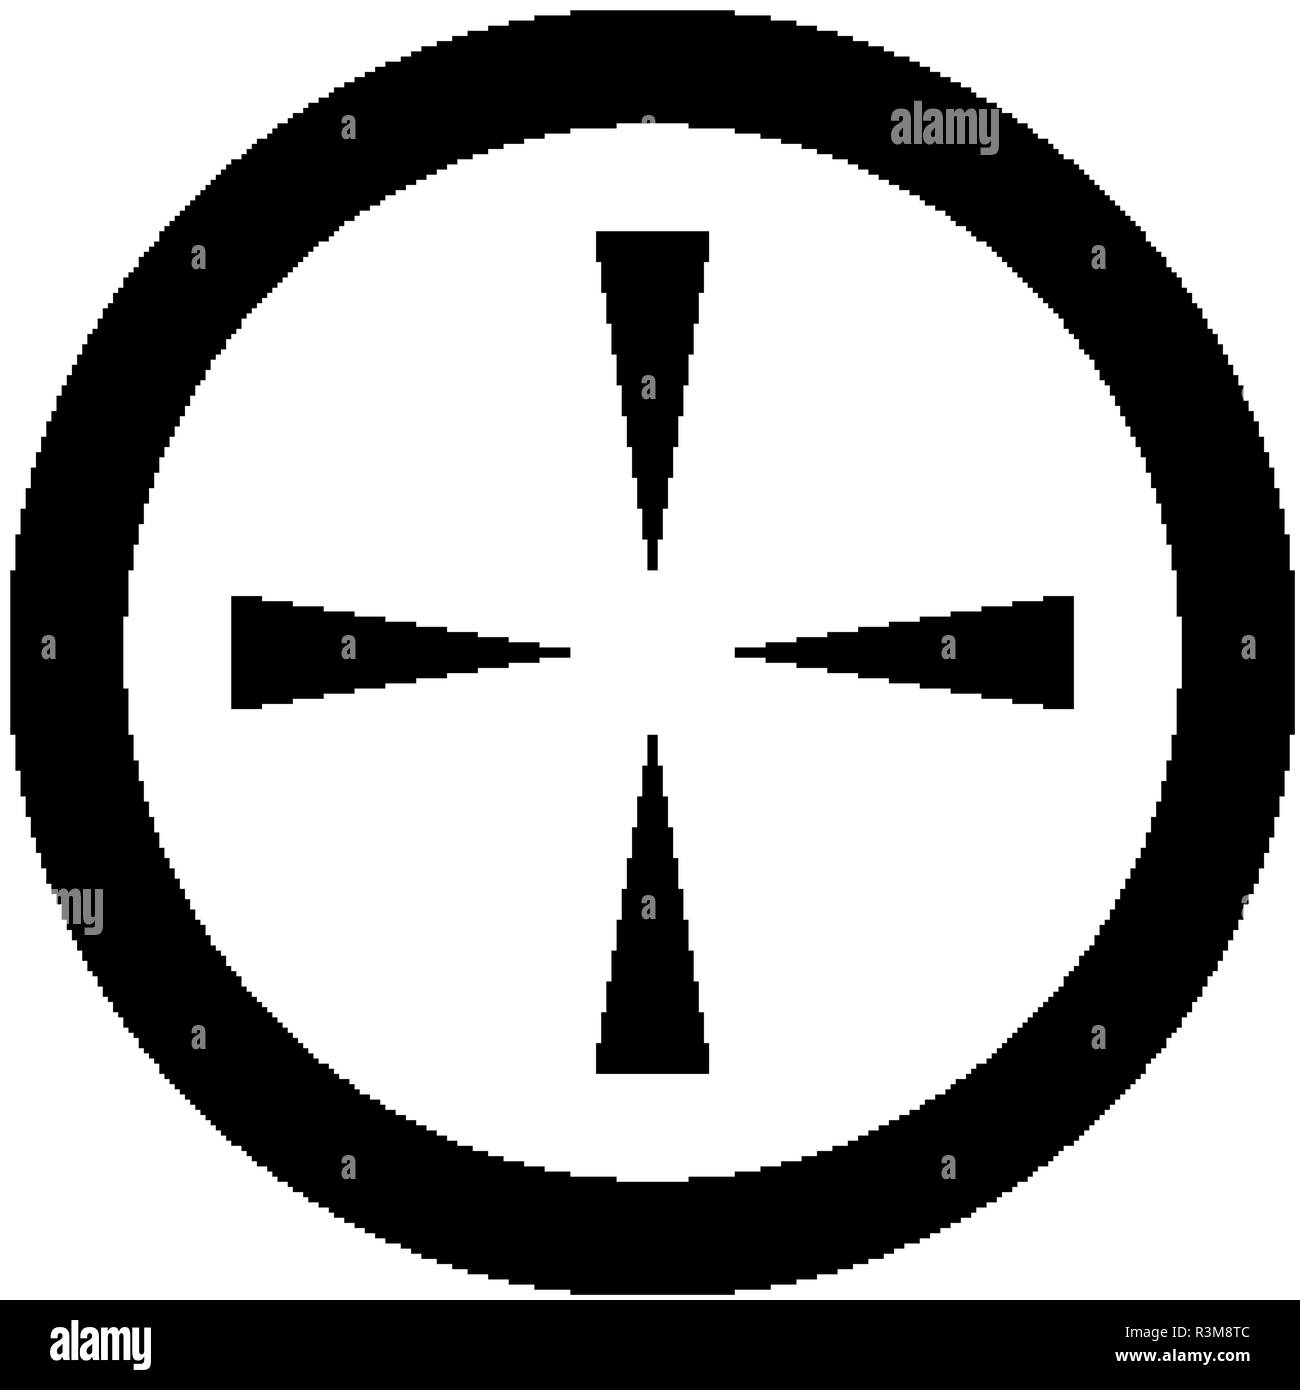 Black aim icon. Sniper scope crosshairs sign Stock Vector